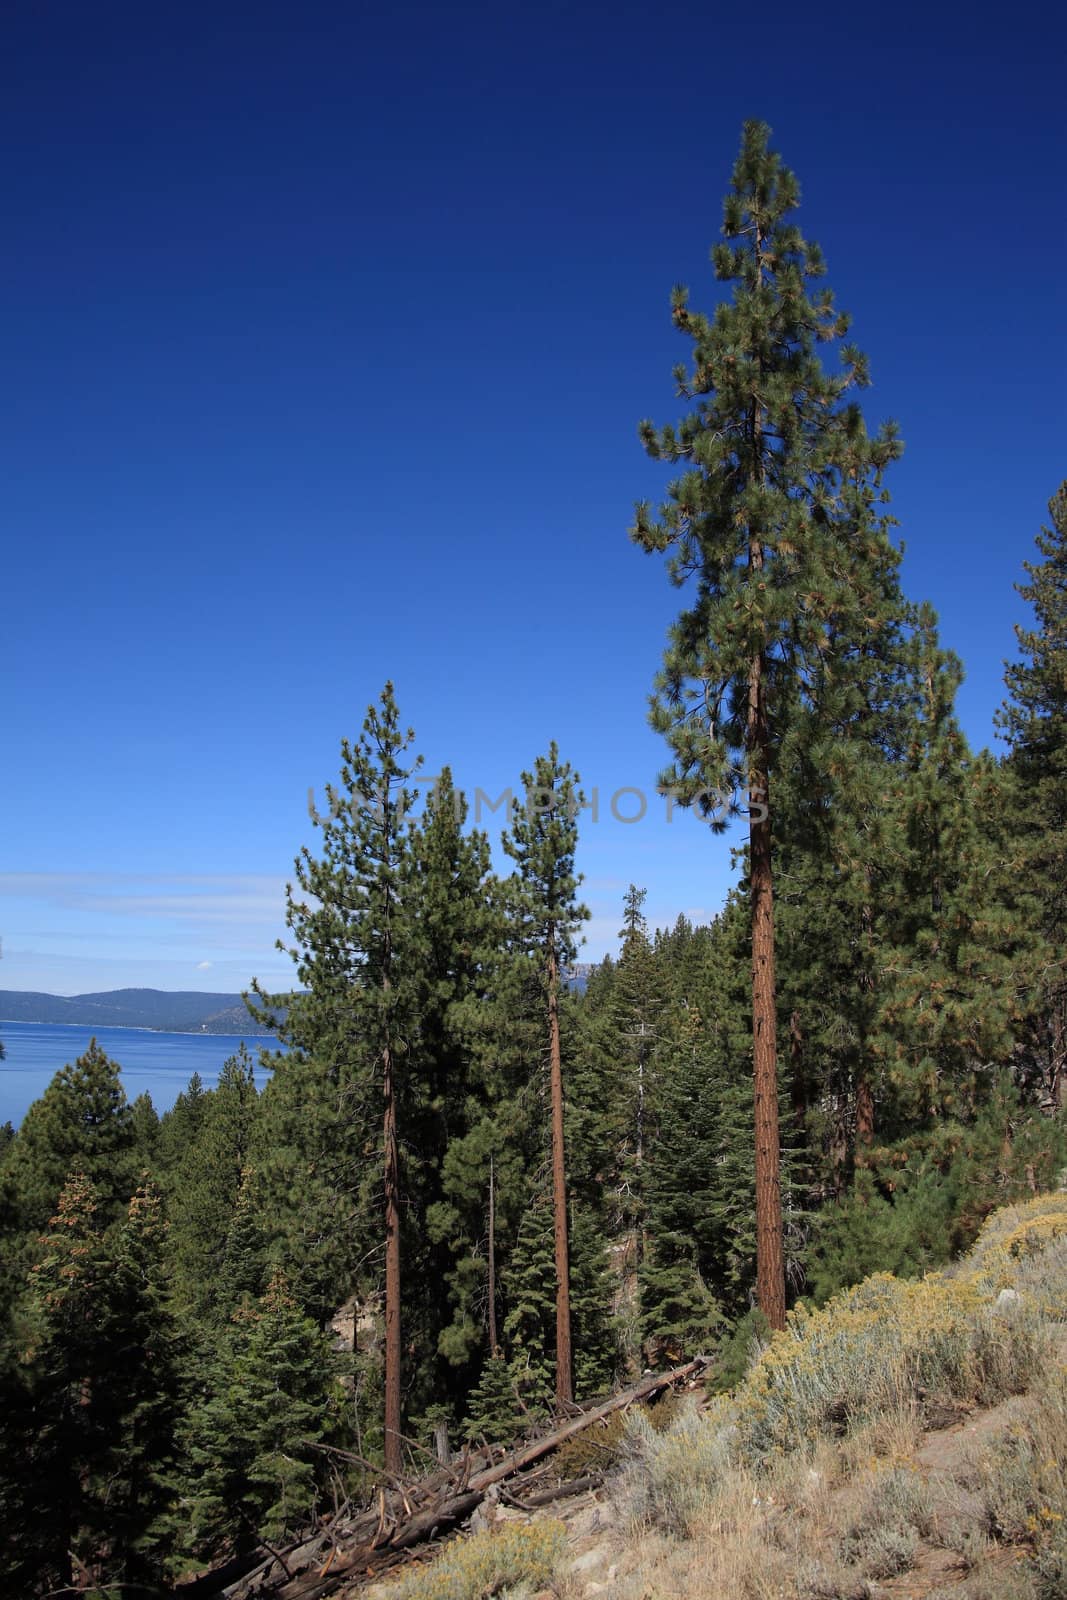 Pine trees of a Lake Tahoe mountain slope.